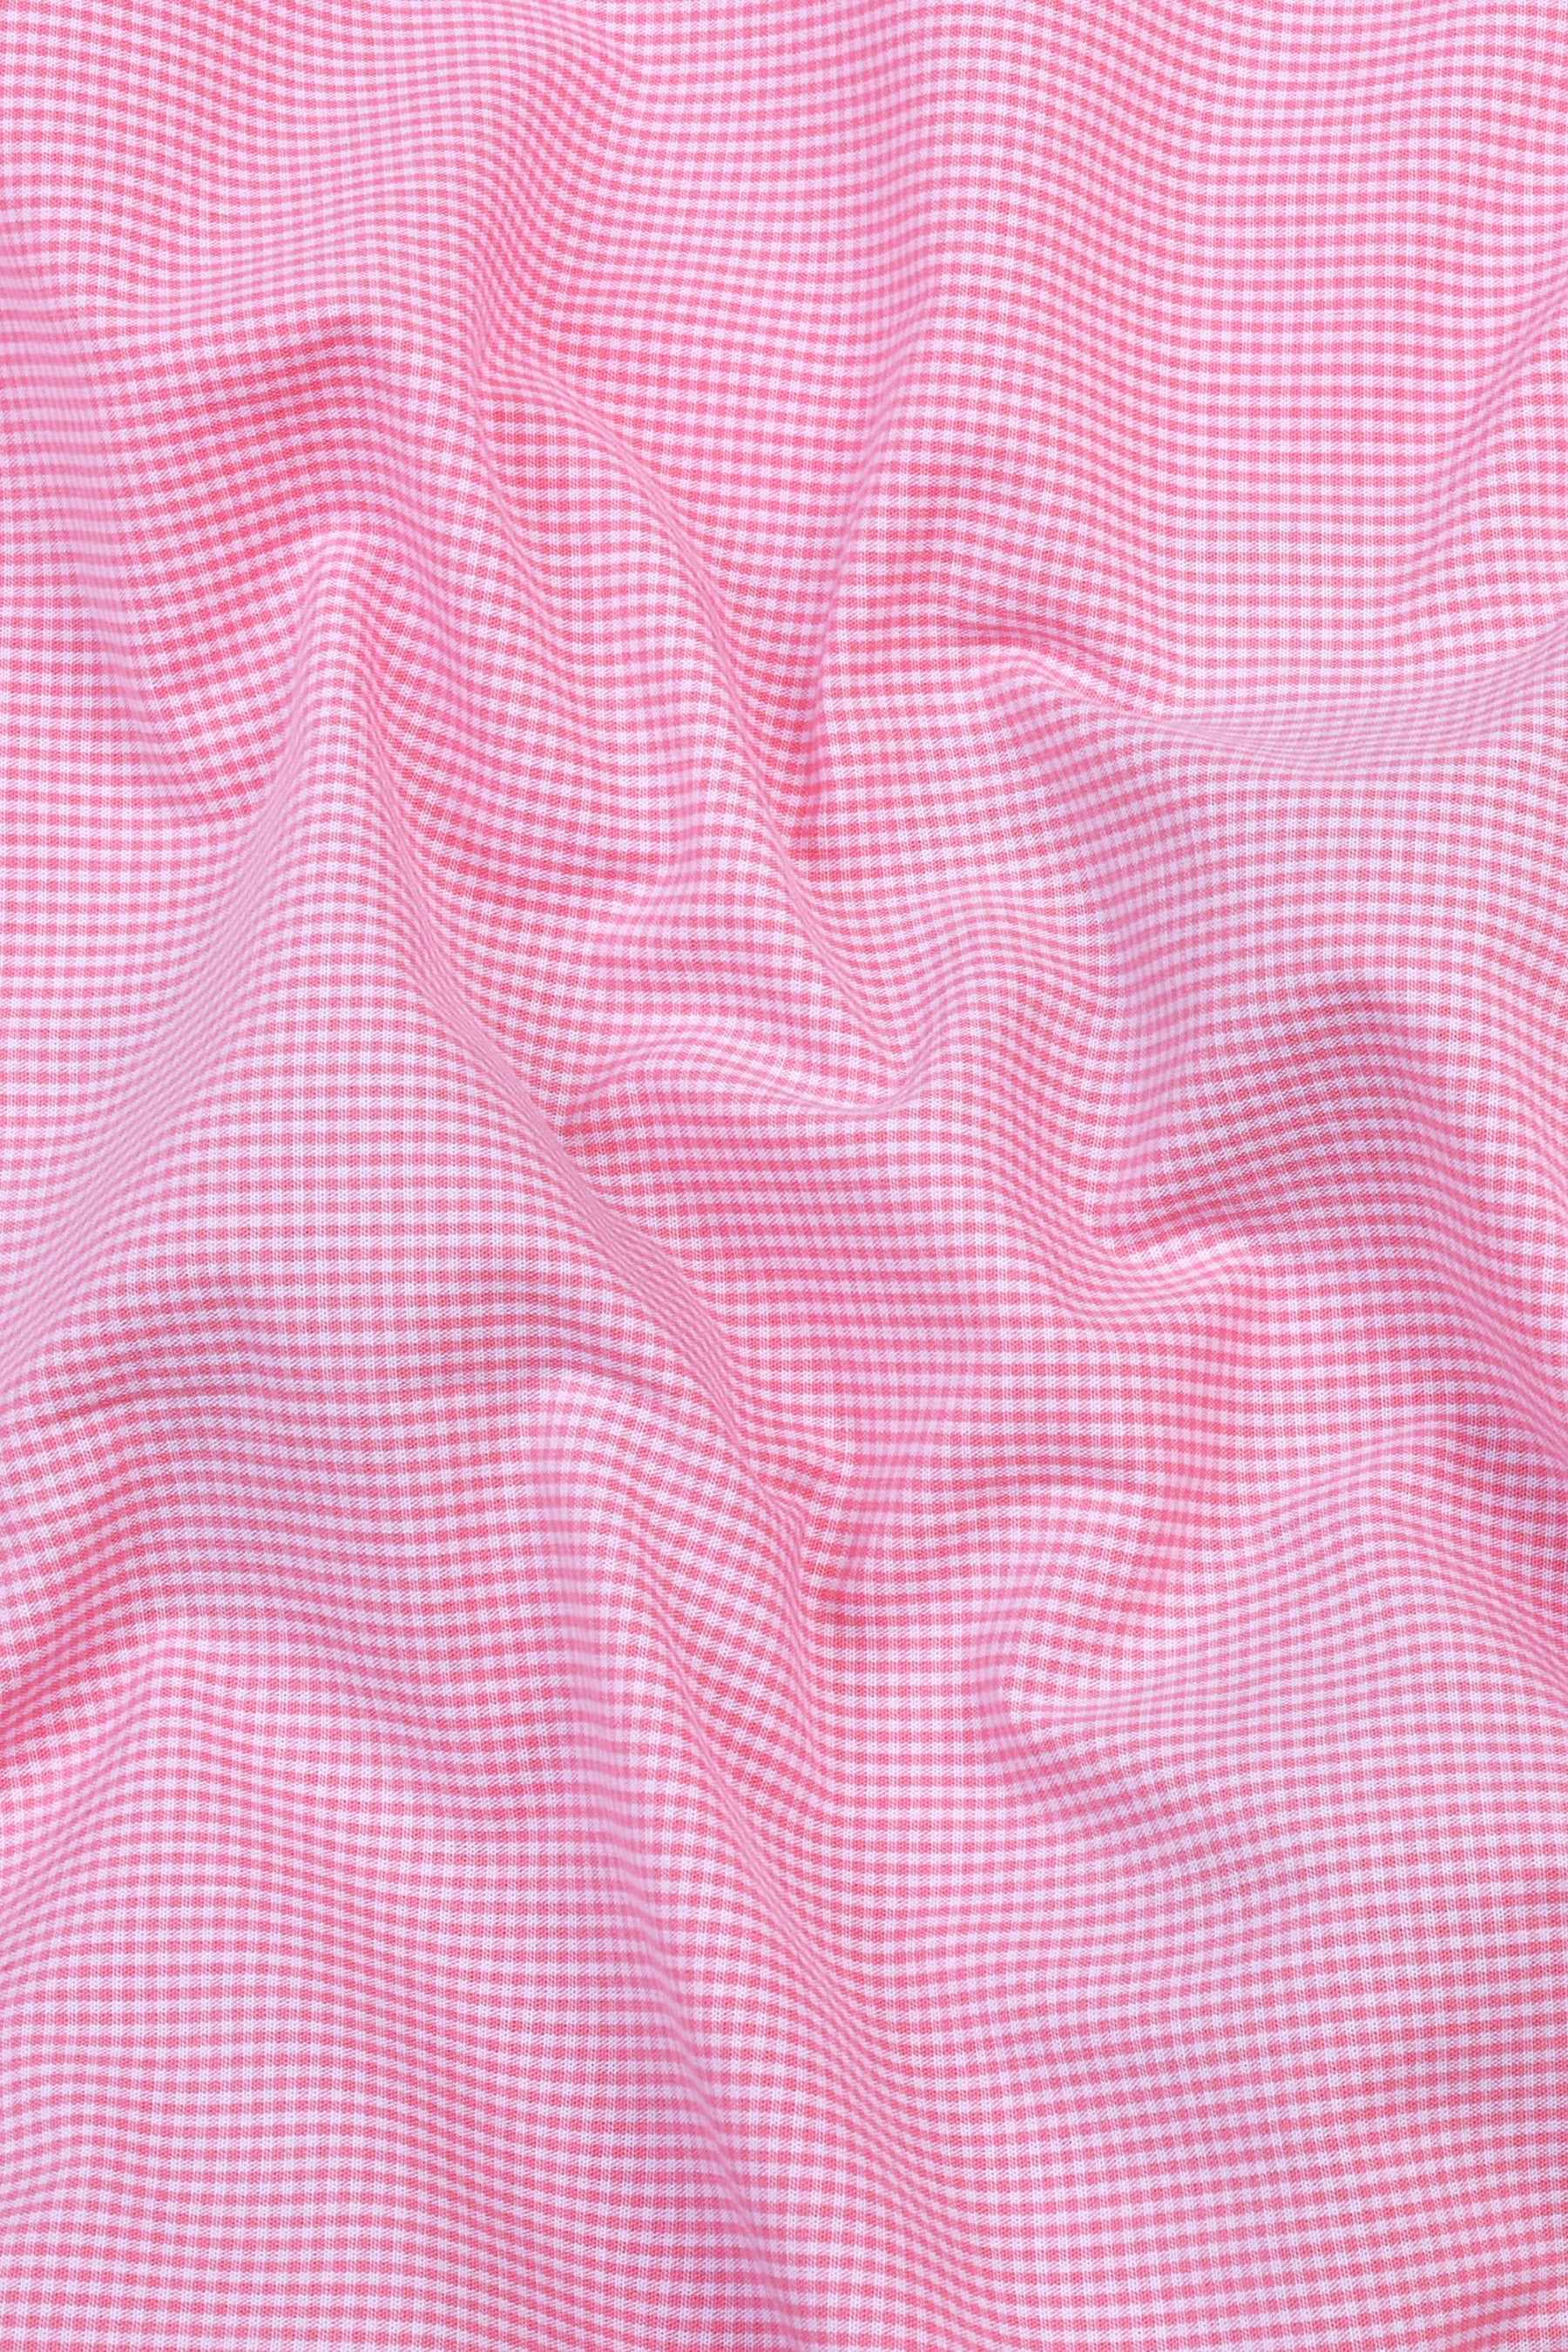 Watermalon pink with white mini micro check shirt